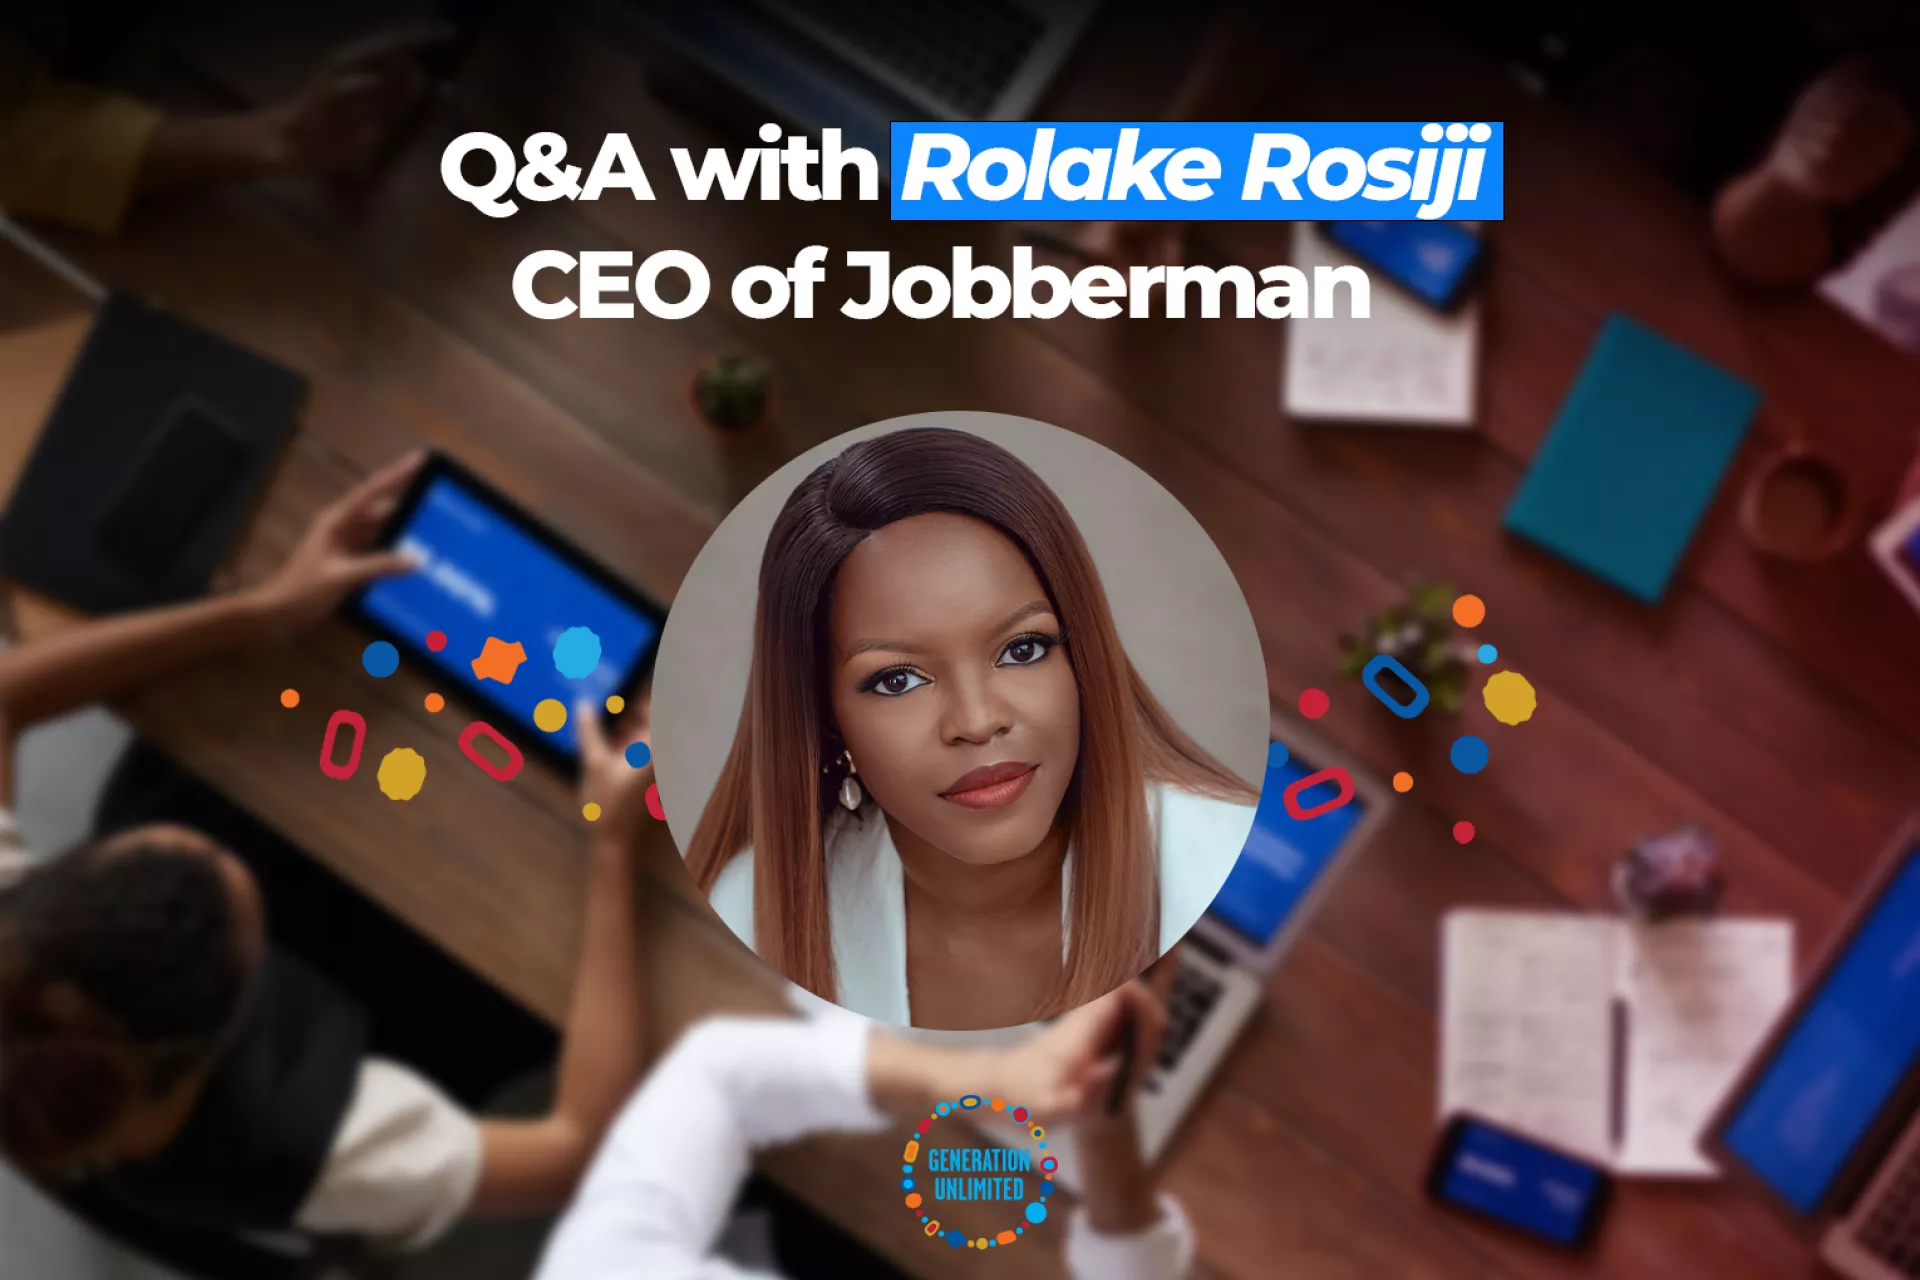 Rolake Rosiji portrait on a graphic saying "Q&A with Rolake Rosiji, CEO of Jobberman"